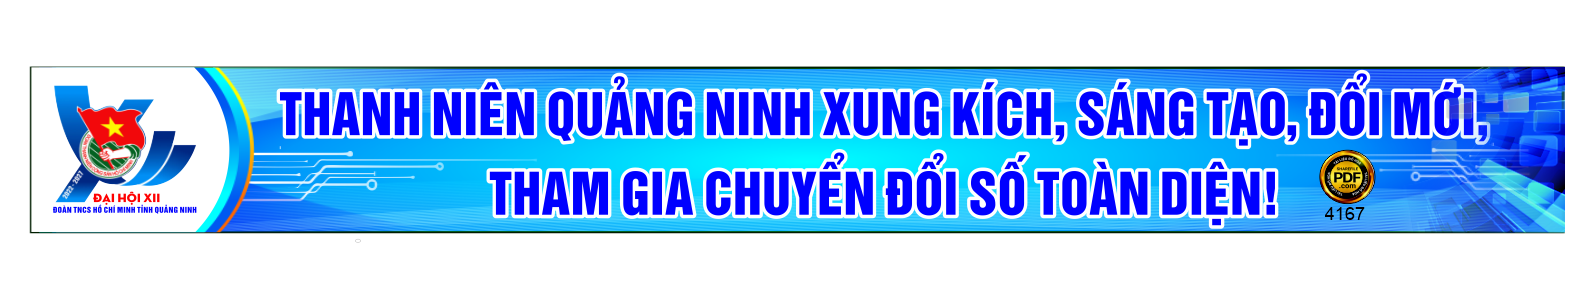 BANG RON THANH NIEN QUANG NINH THAM GIA CHUYEN DOI SO.png